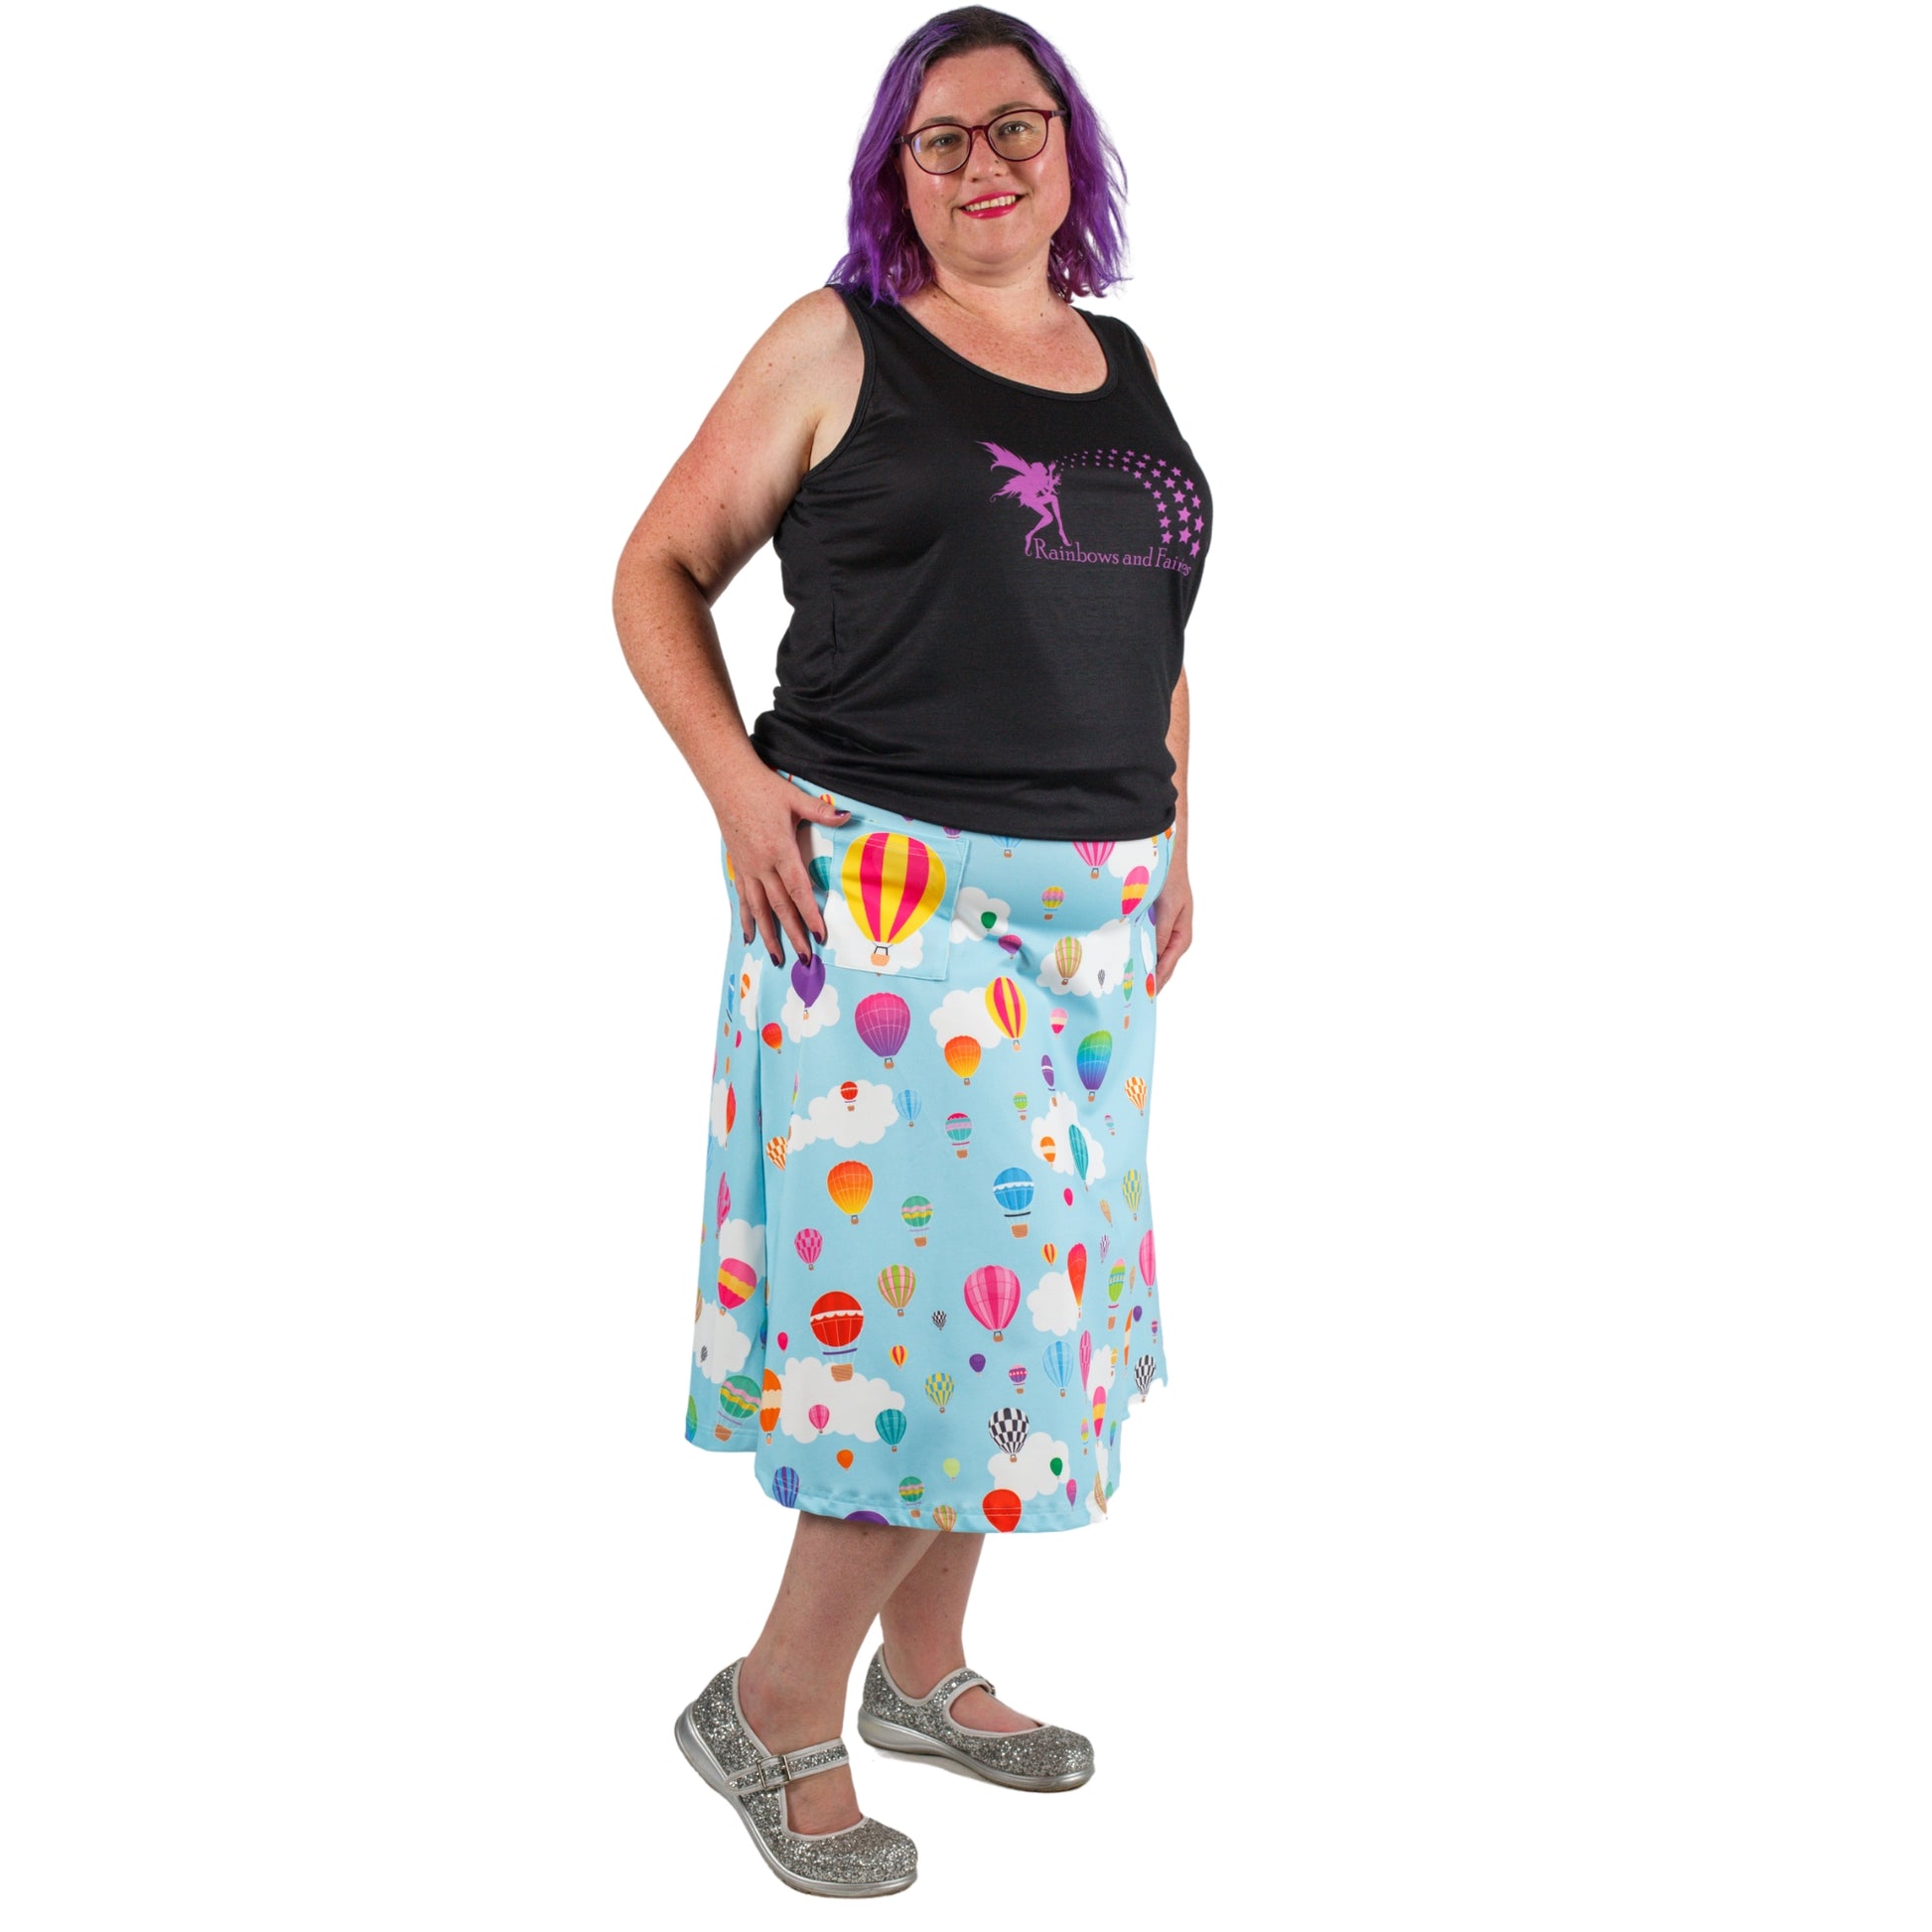 Whimsy Original Skirt by RainbowsAndFairies.com.au (Balloons - Hot Air Balloon - Skirt With Pockets - Kitsch) - SKU: CL_OSKRT_WHIMS_ORG - Pic-04